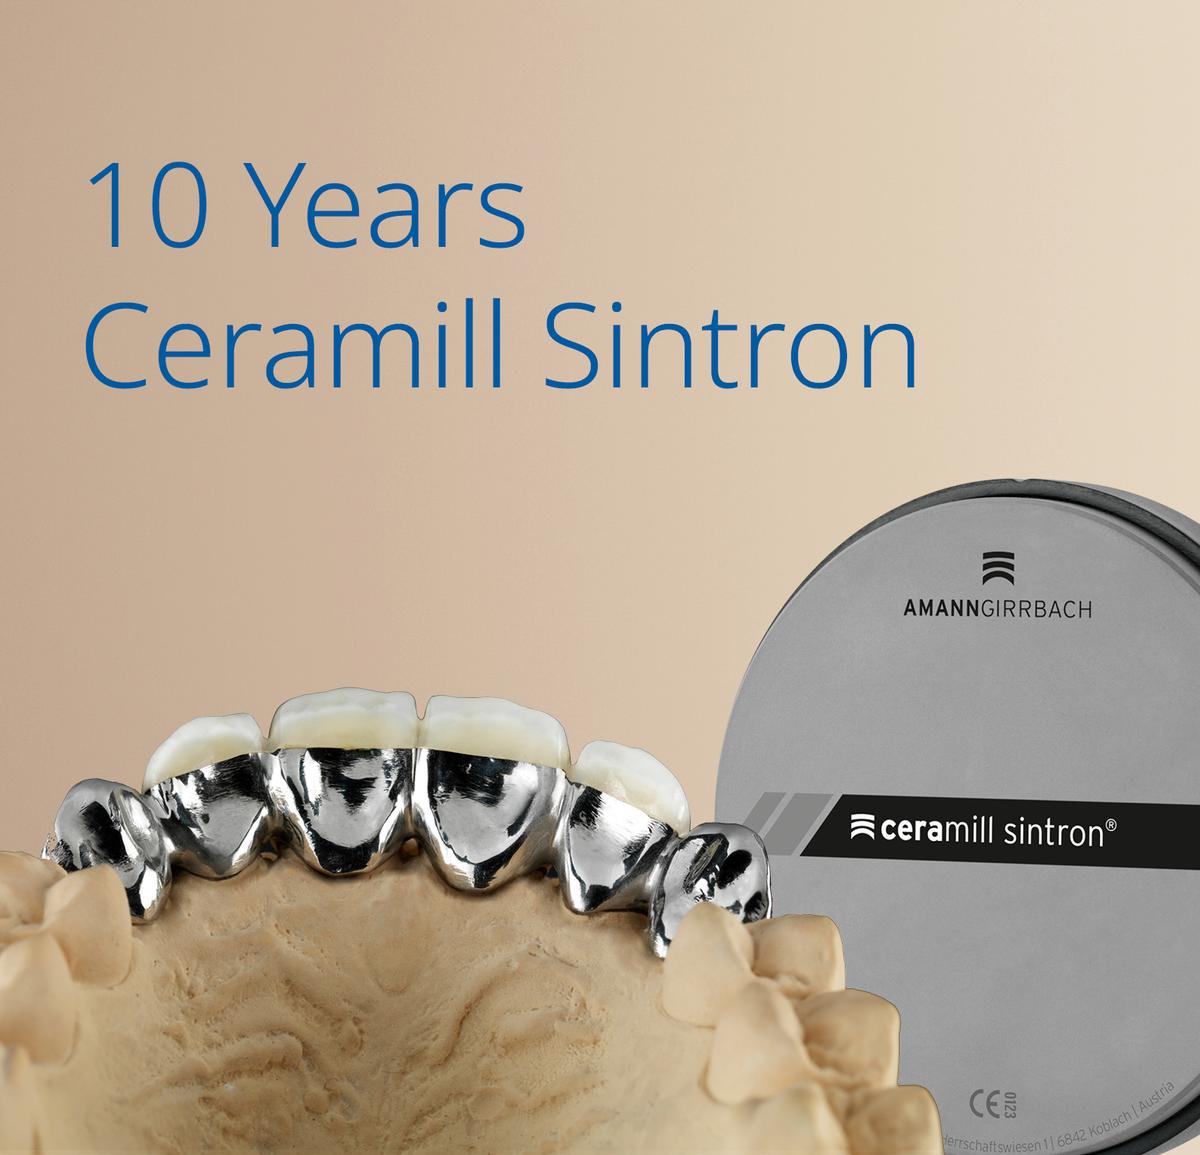 10th Anniversary of Ceramill Sintron